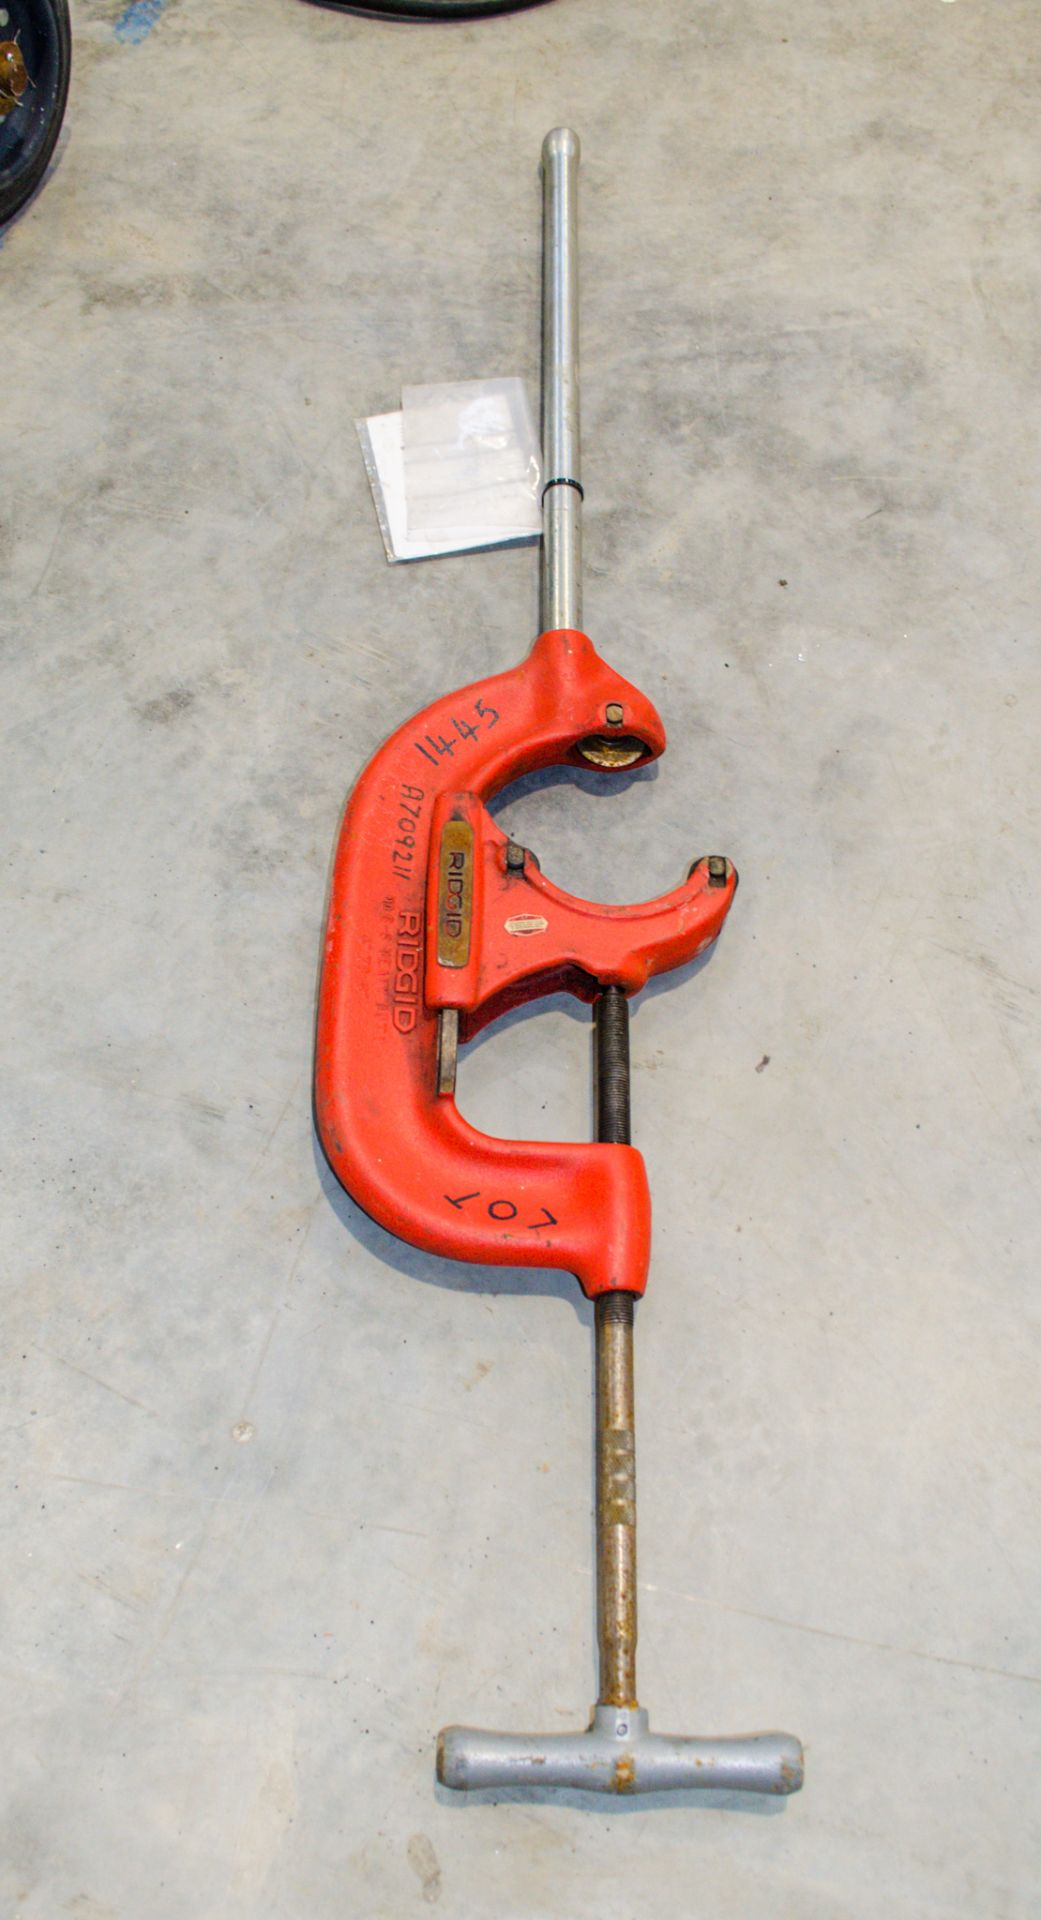 Ridgid 4 to 6 inch pipe cutter A709211